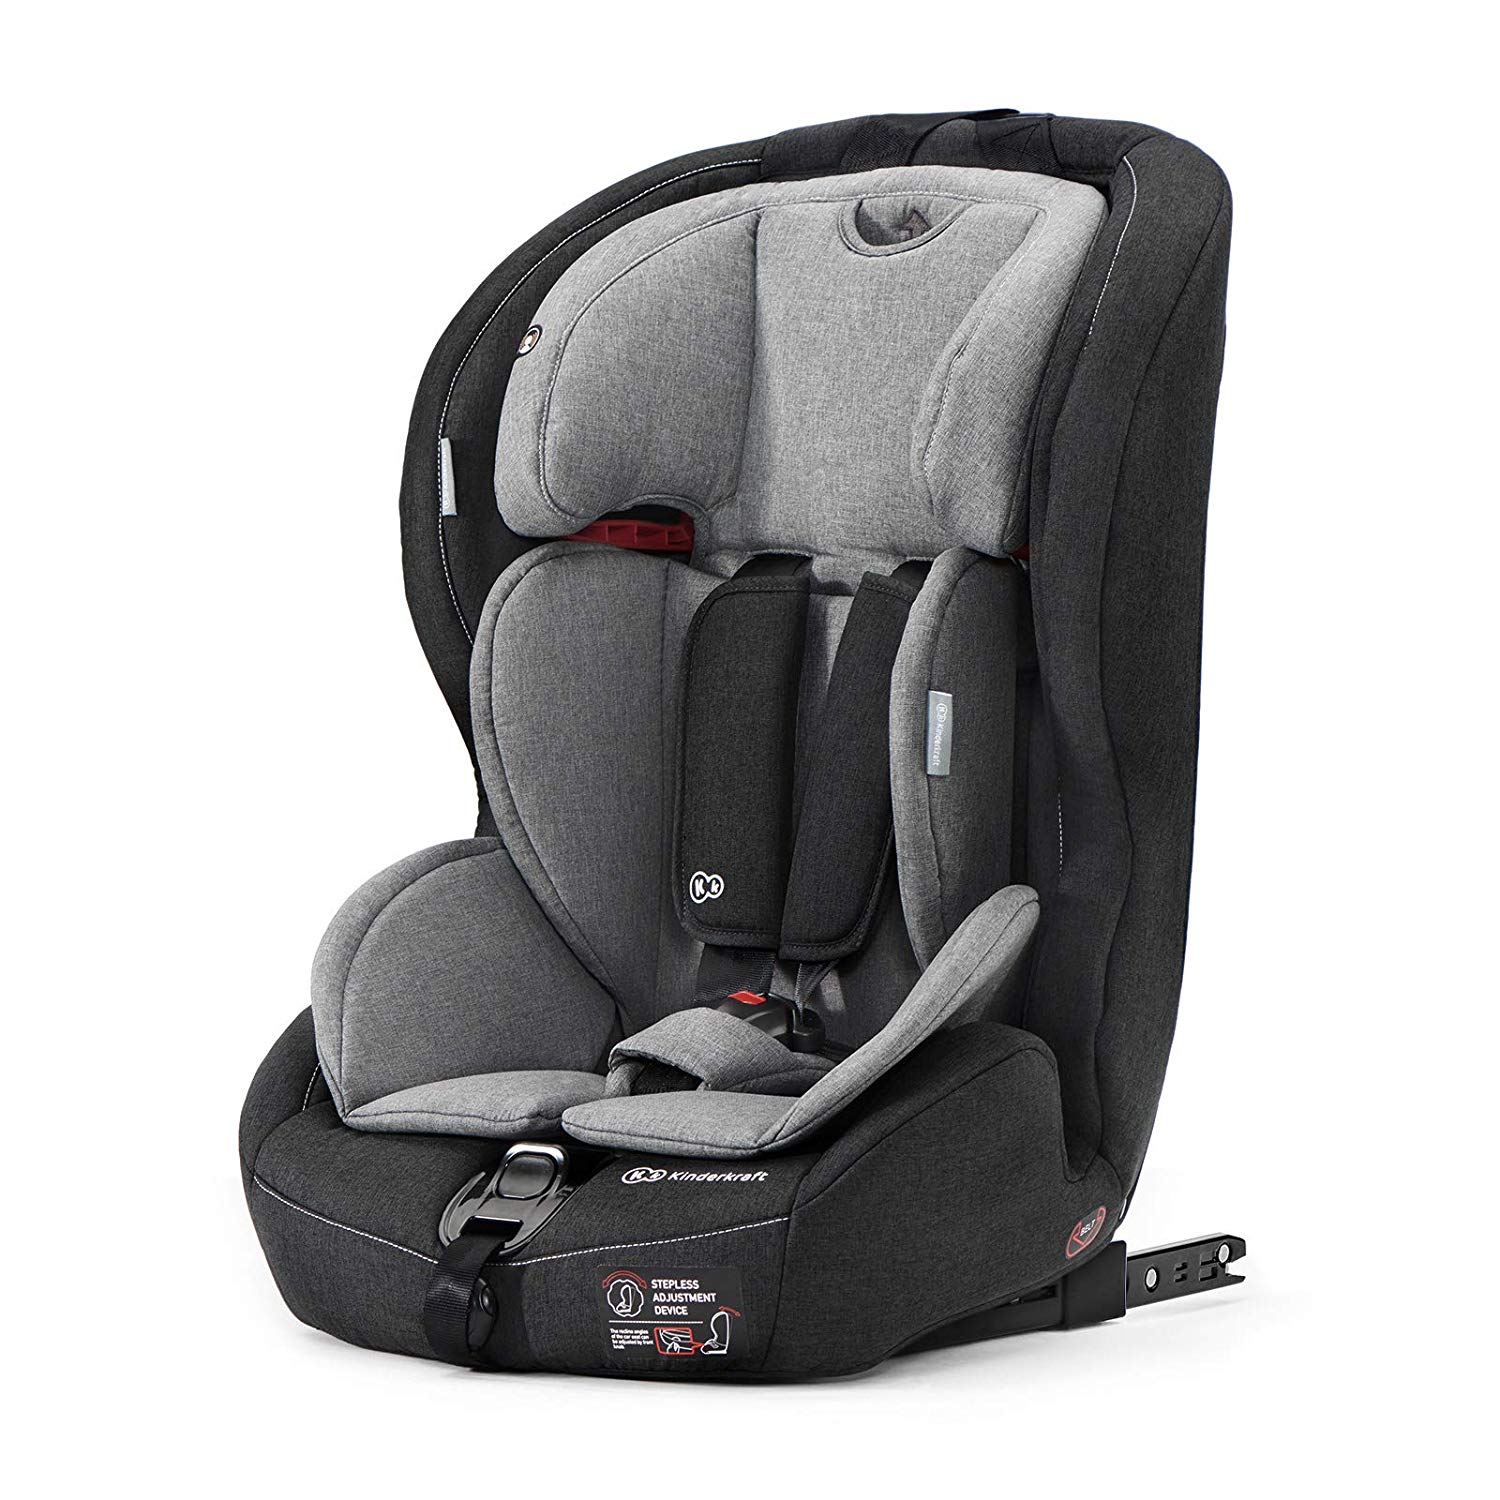 Kinderkraft child car seat SAFETY FIX, child car seat, car seat, child seat with Isofix and top tether, group 1/2/3 9-36kg, 5 point seat belt, adjustable headrest, ECE R44 / 04, black gray